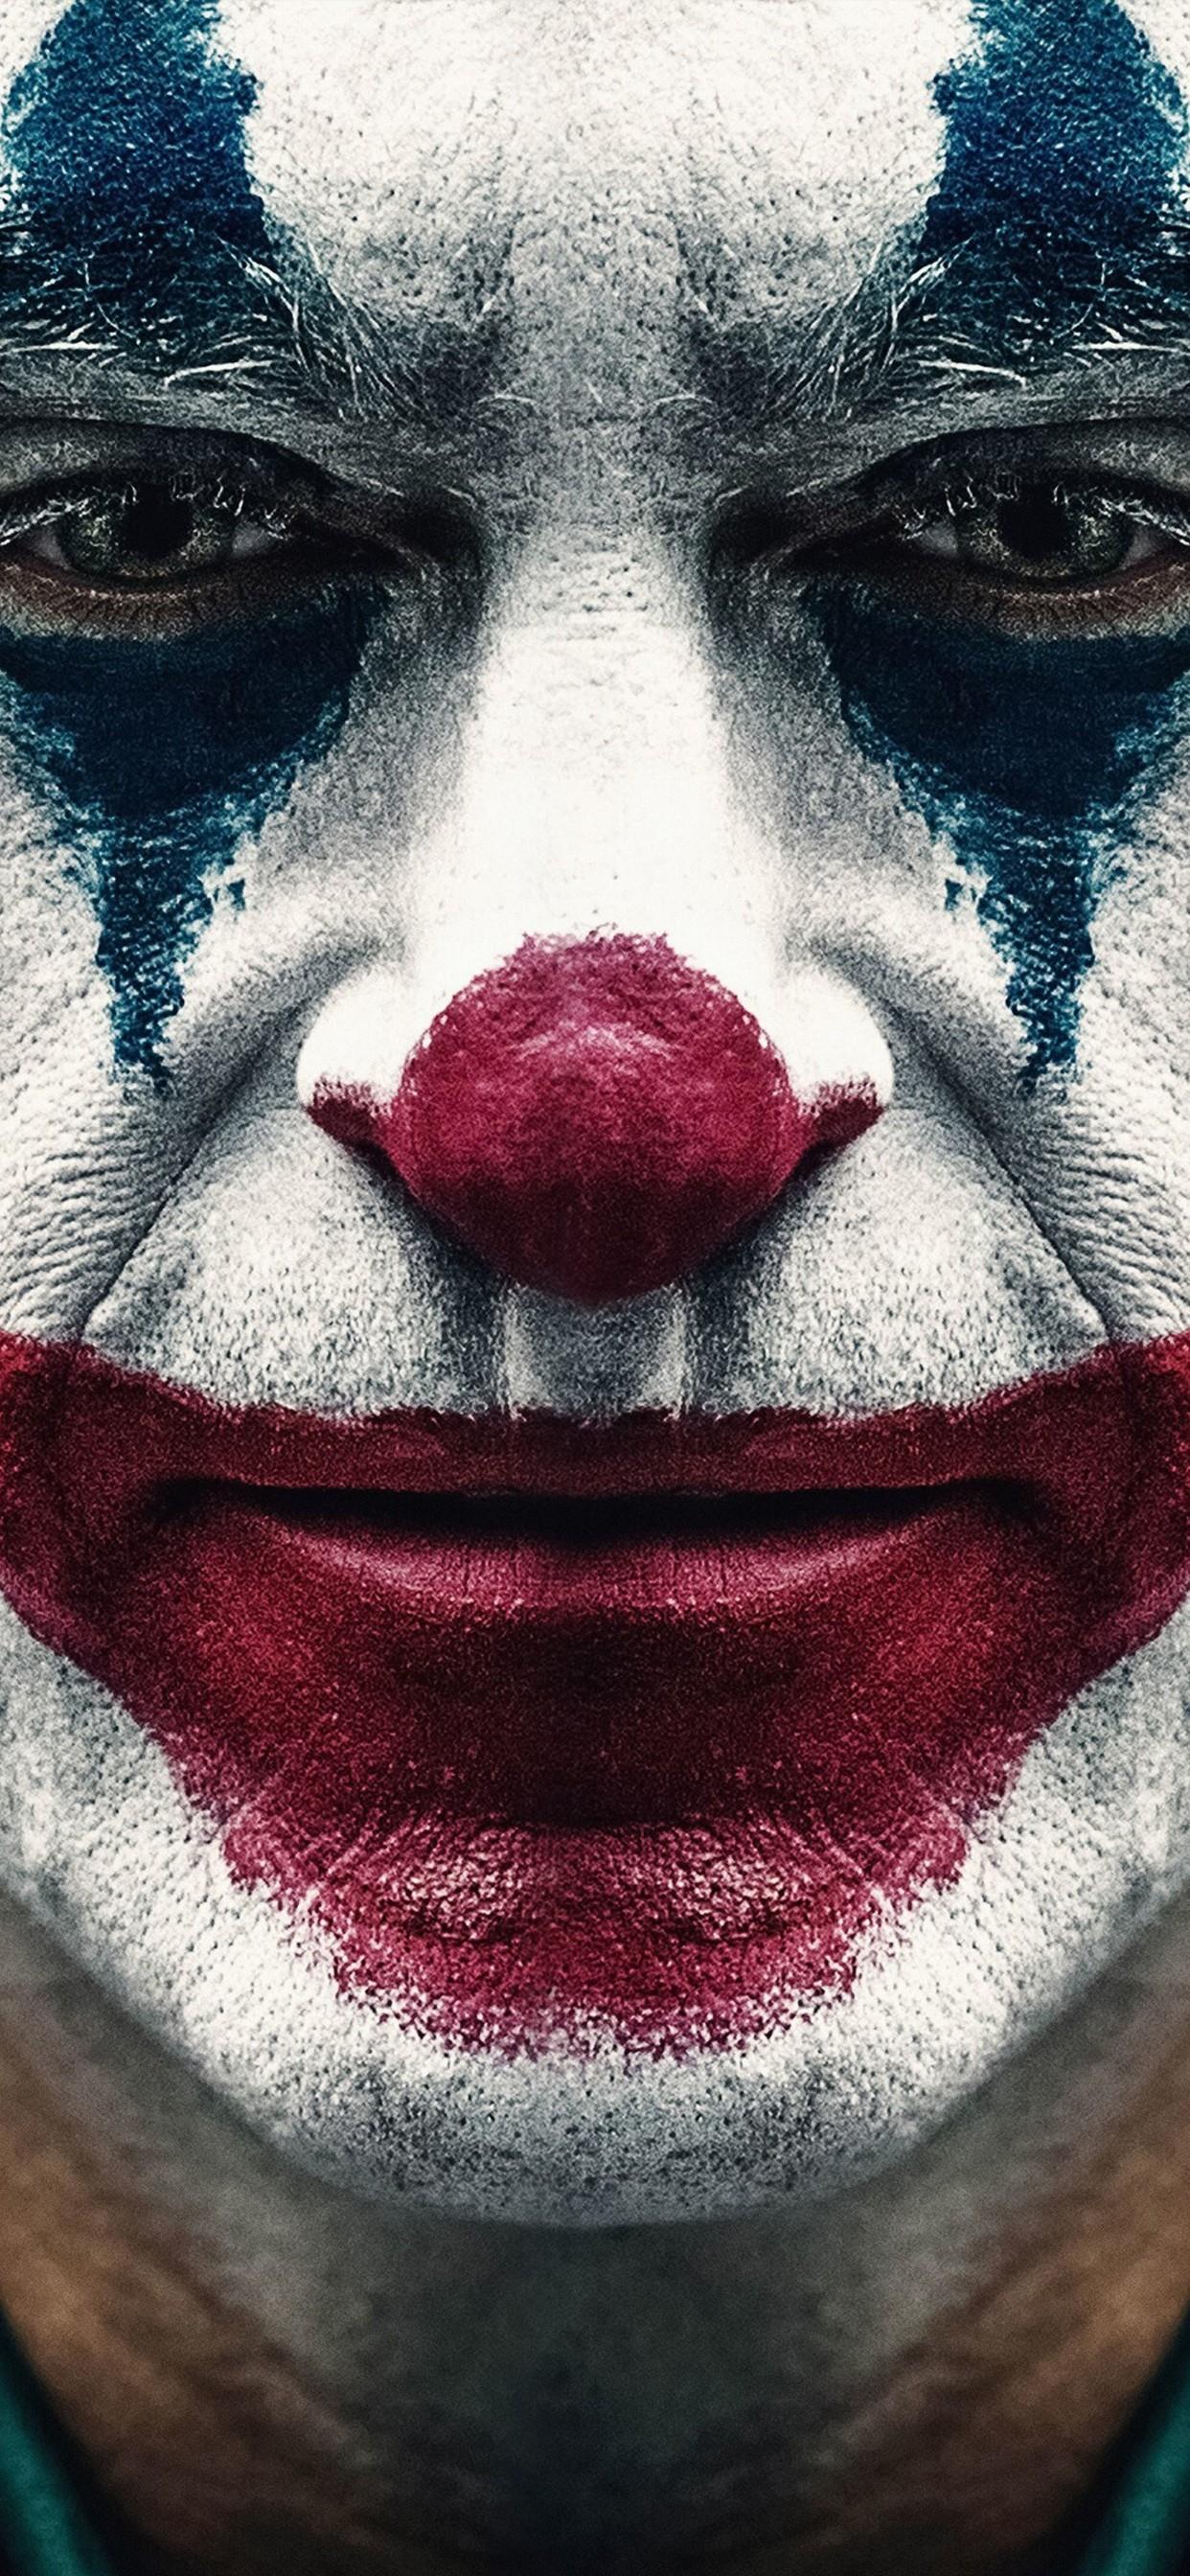 joker 2019 joaquin phoenix clown iPhone Wallpaper Free Download